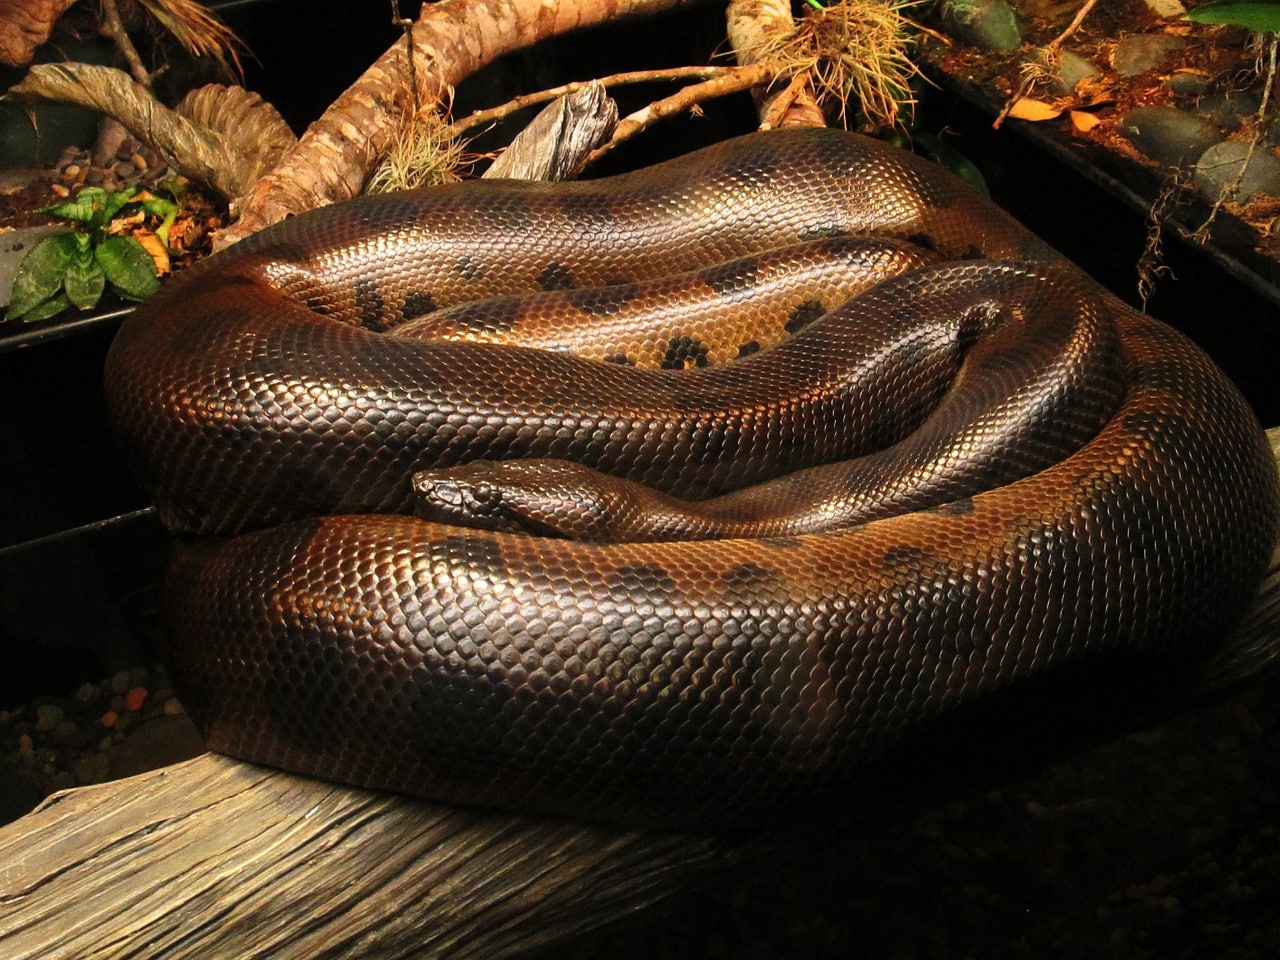 Large Snake Inside The Display Aquarium At The Snake Farm In Siam Sepentarium